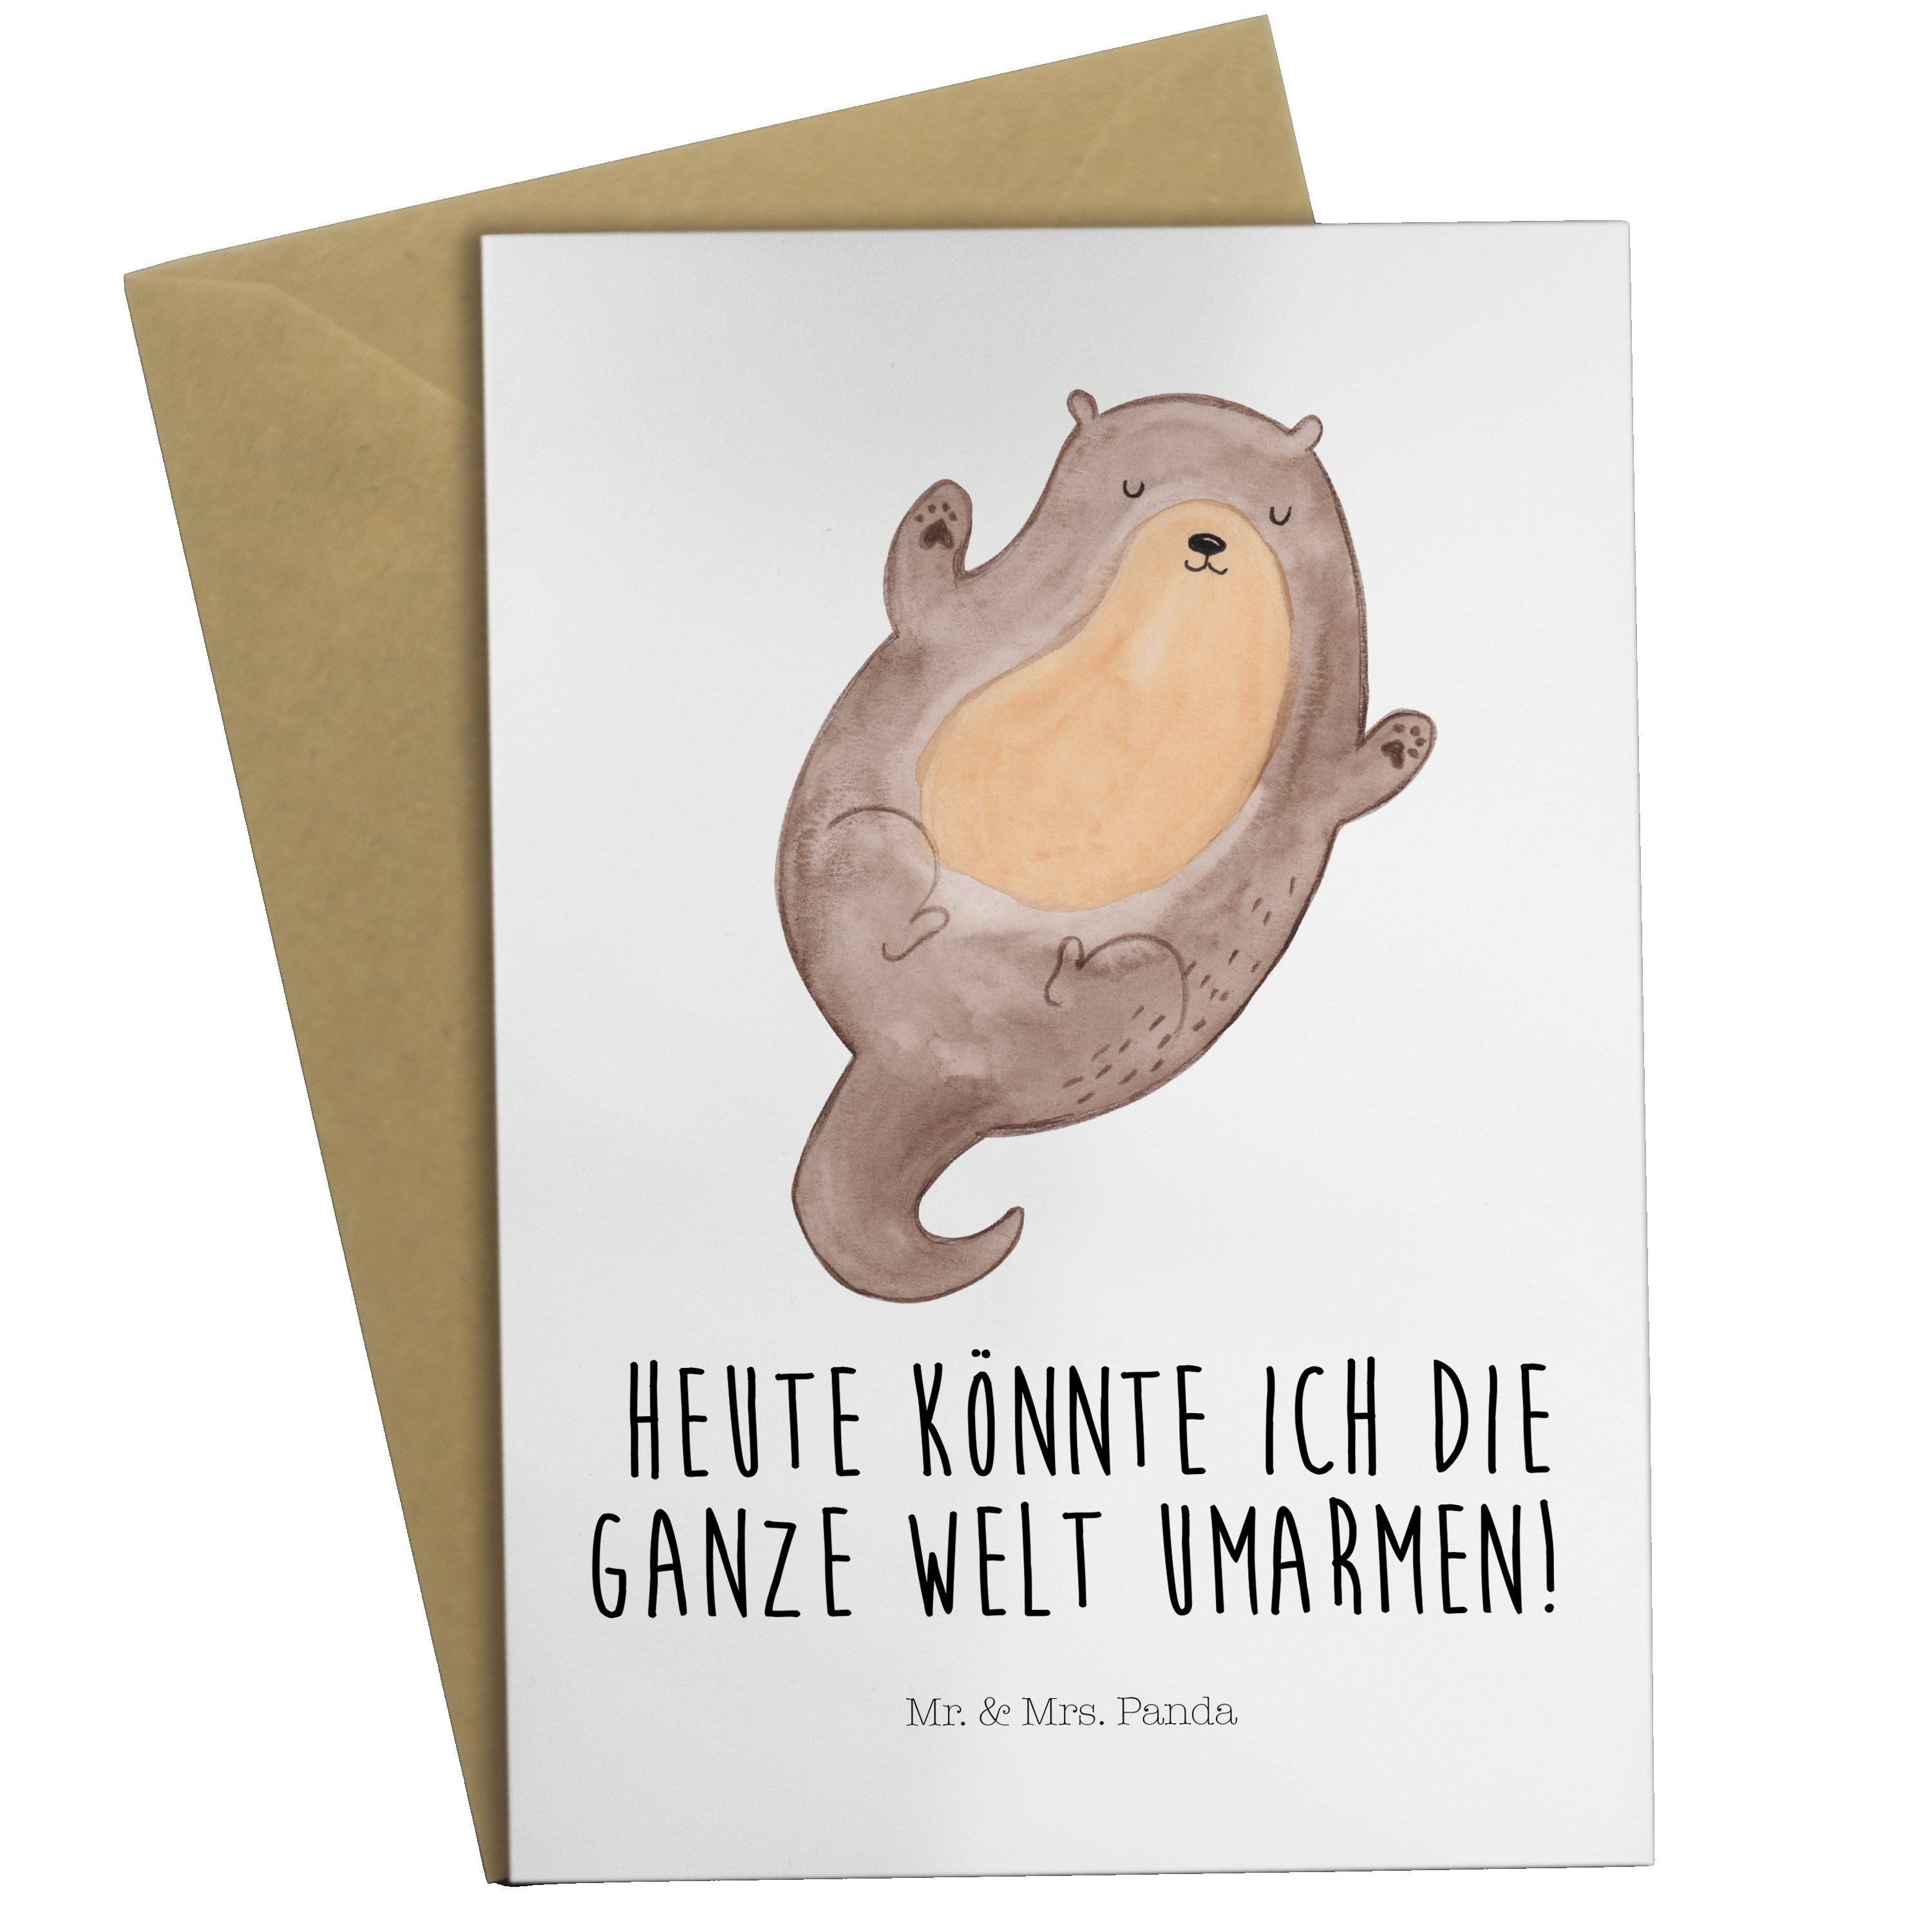 Mr. & Mrs. Panda Grußkarte Otter Umarmen - Weiß - Geschenk, Klappkarte, Seeotter, Otter Seeotte